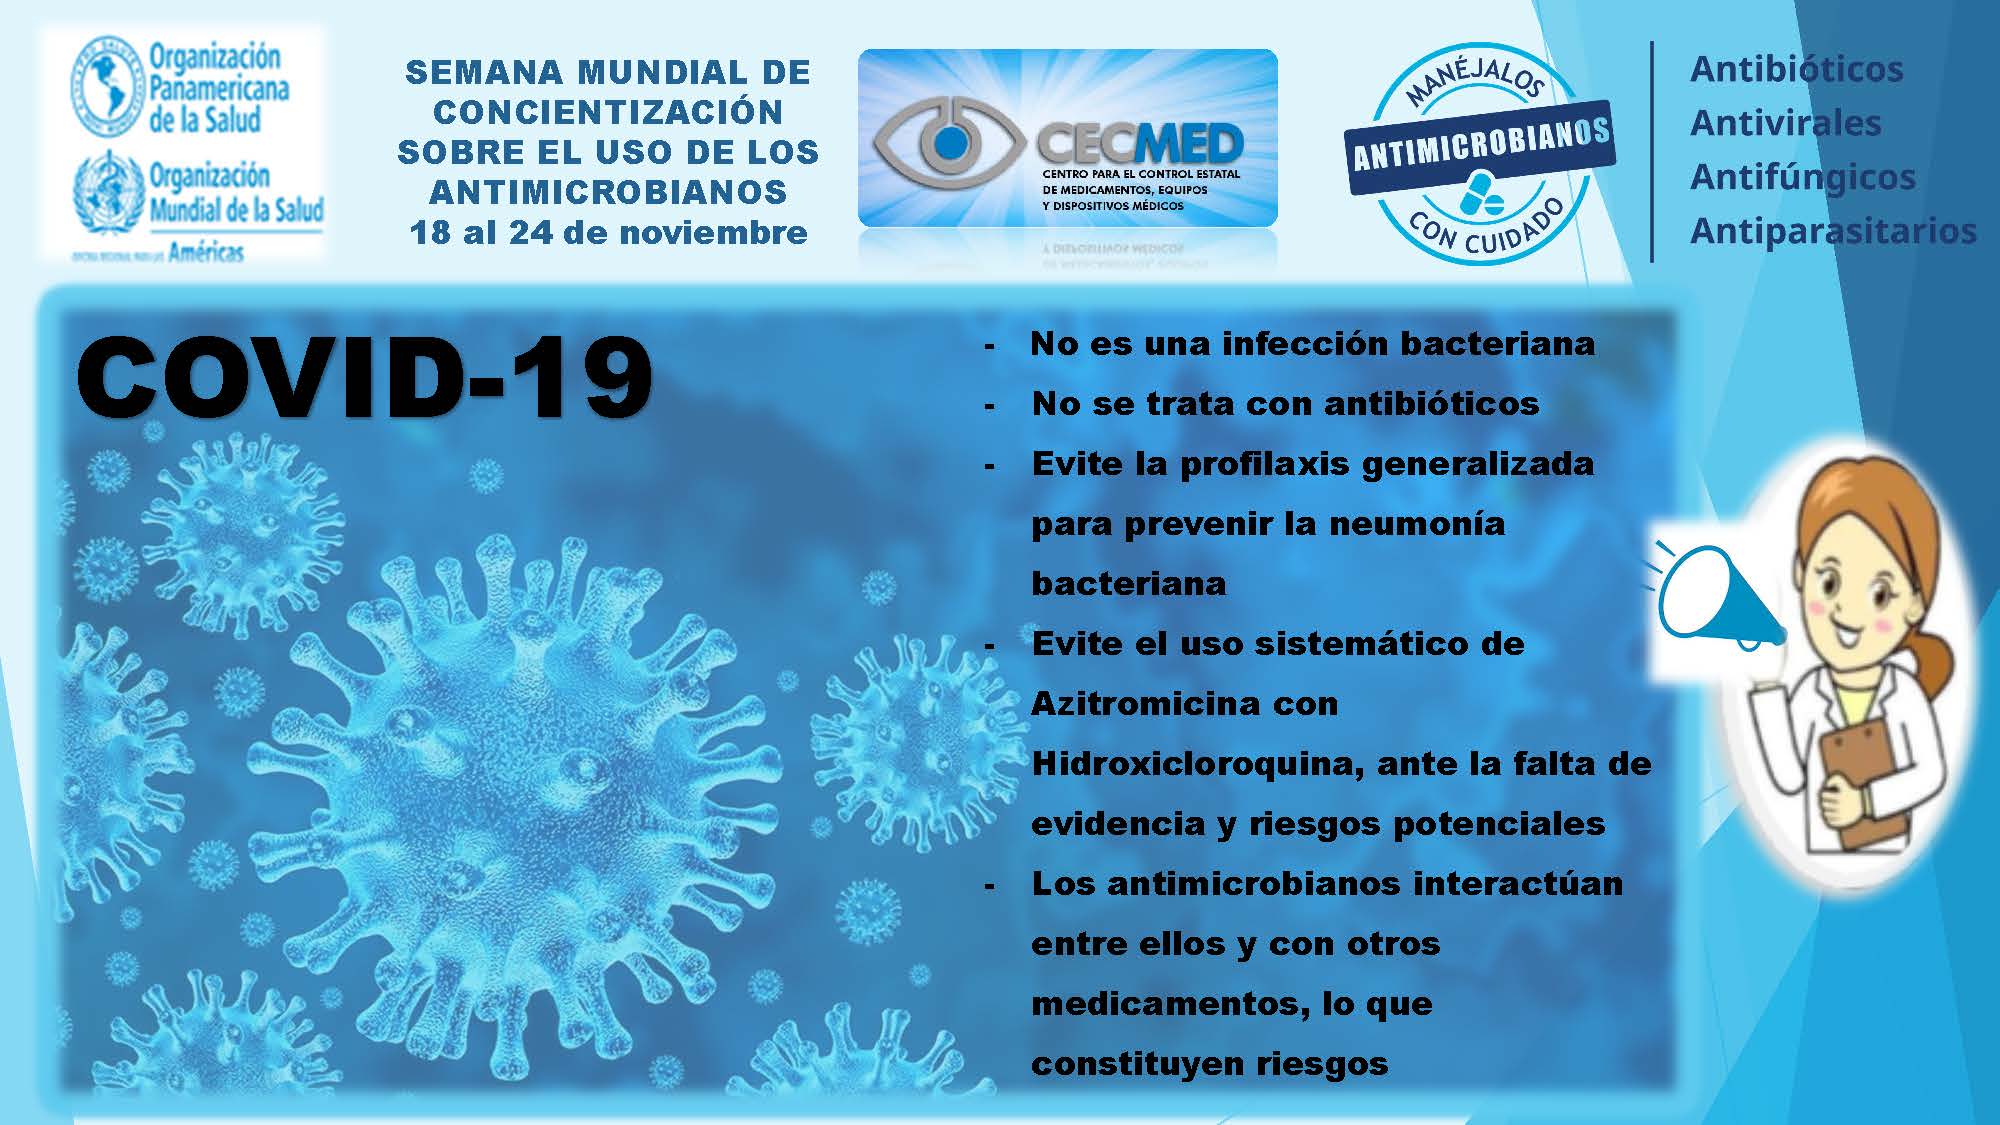 antimicrobianos, COVID-19